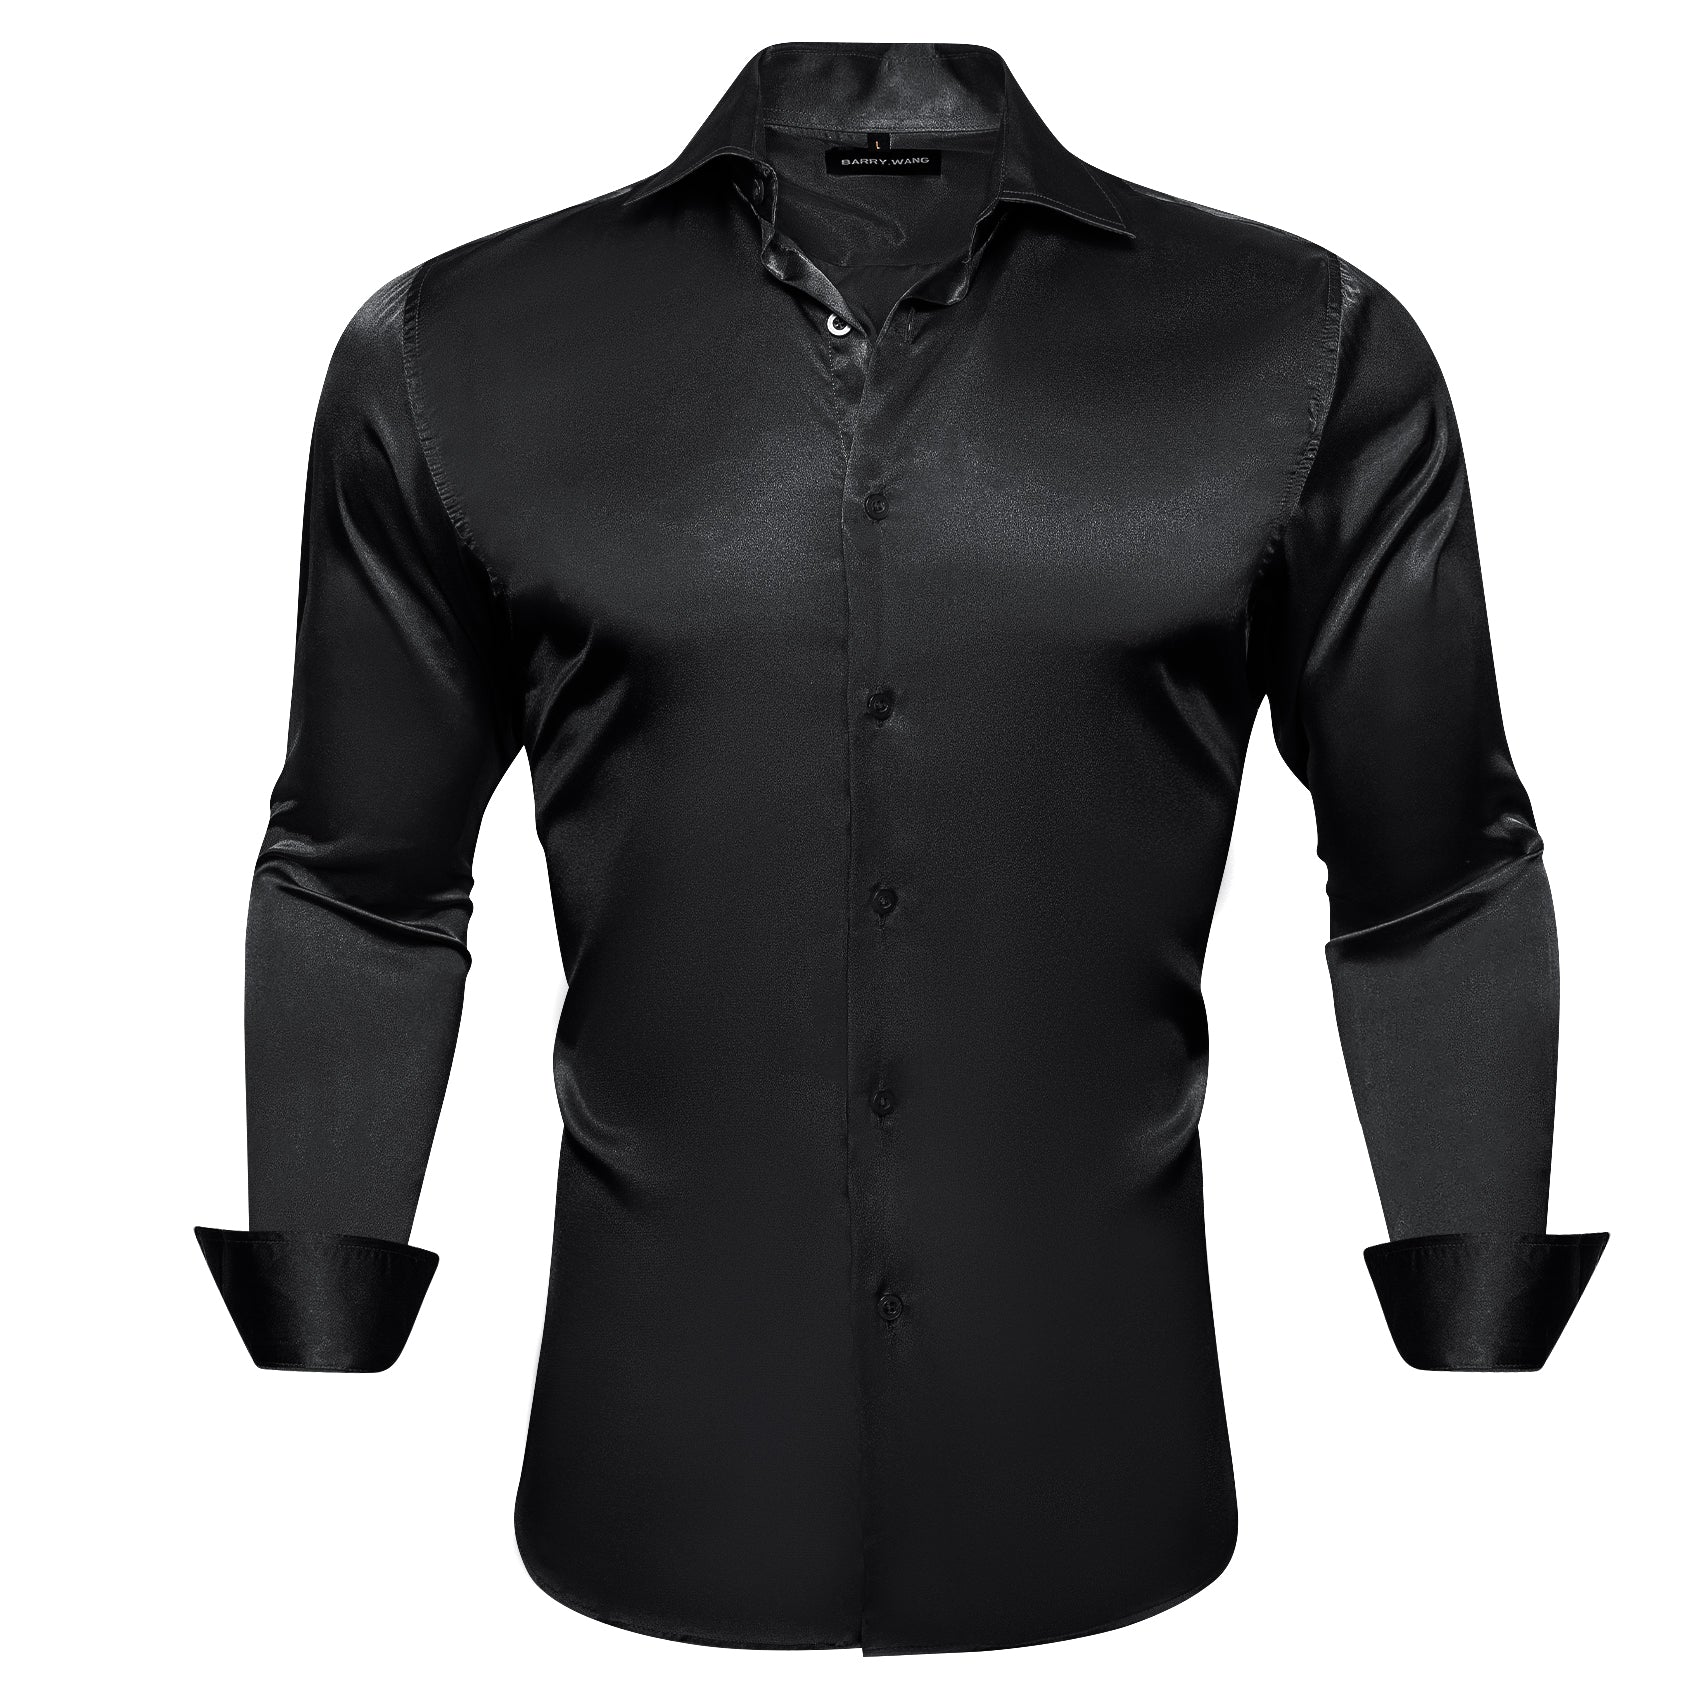 Barry.wang Luxury Black Solid Silk Shirt